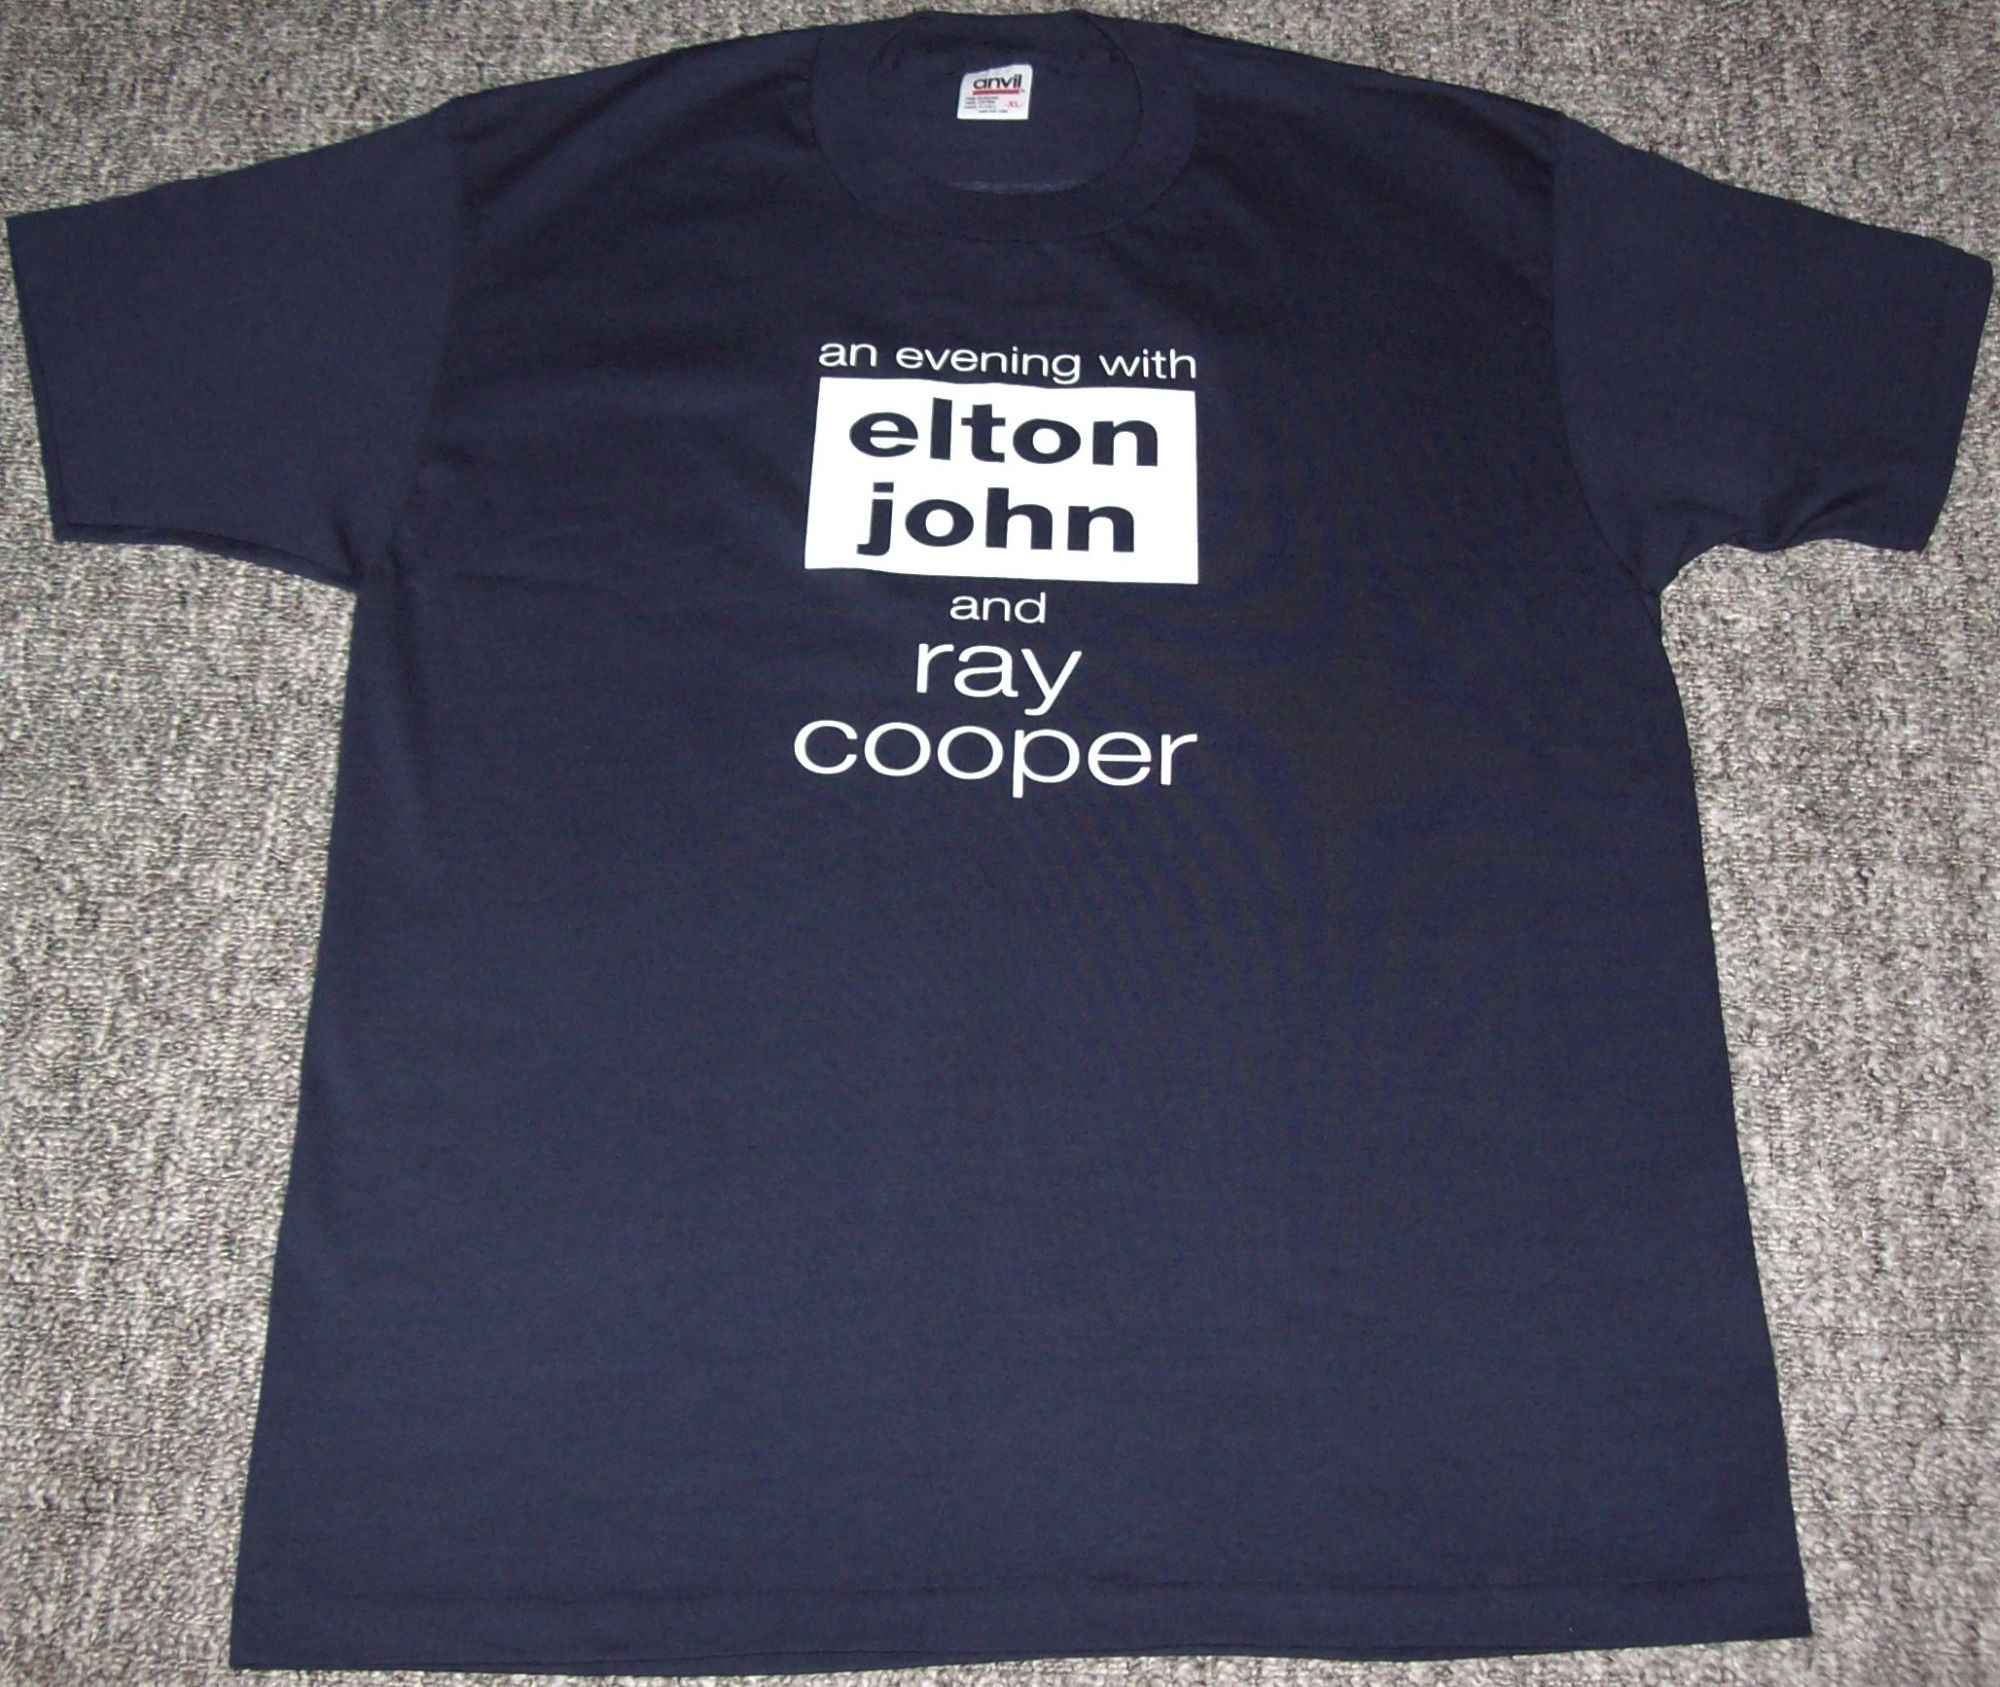 ELTON JOHN AND RAY COOPER 'AN EVENING WITH' U.S. CONCERT TOUR T-SHIRT 1993